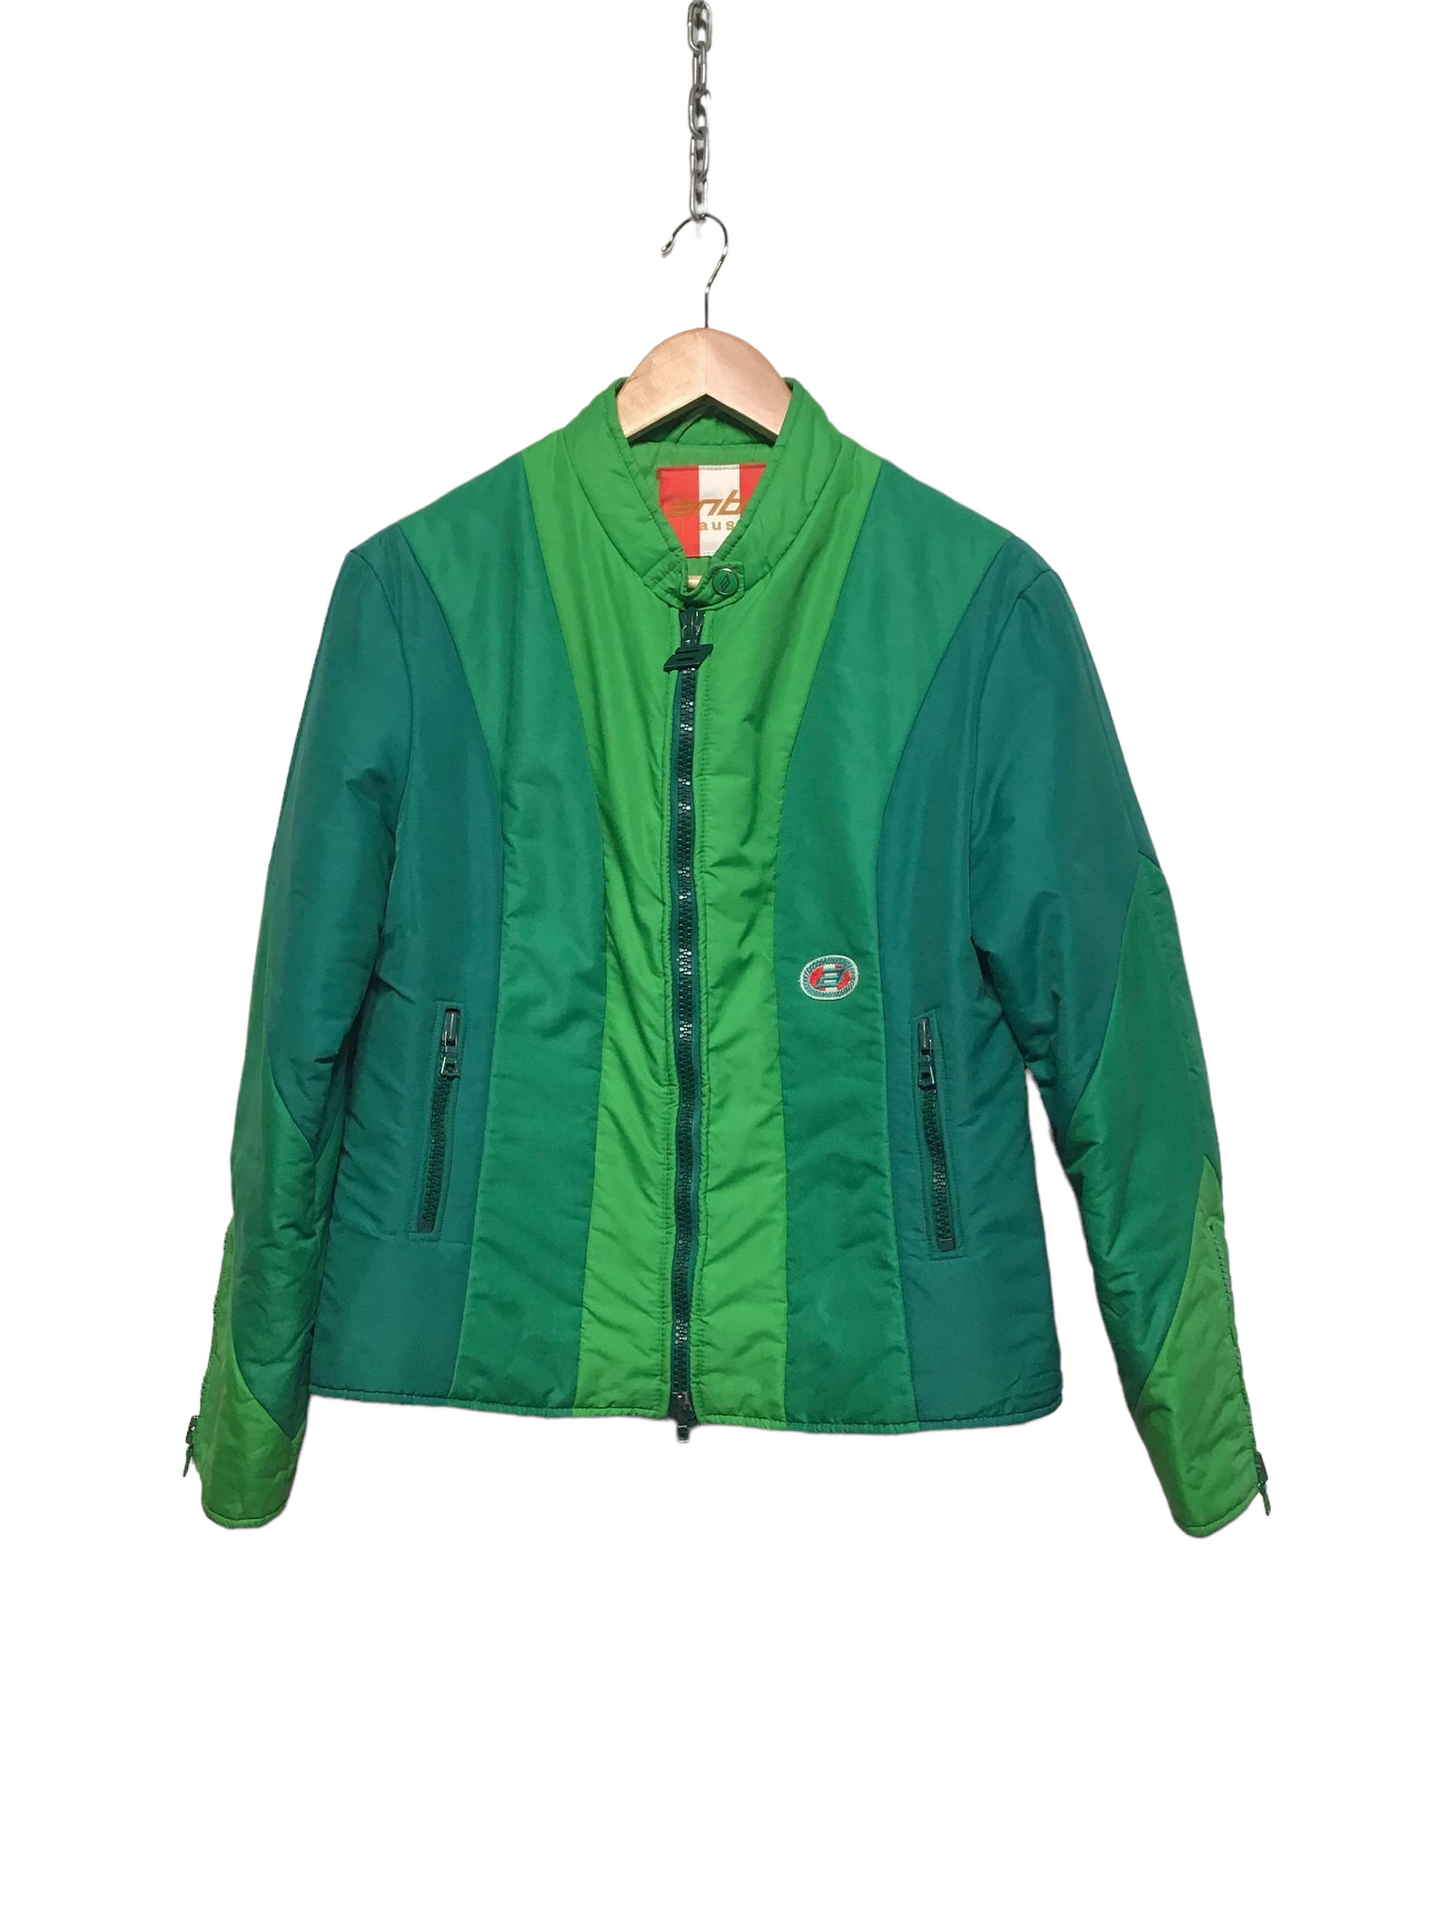 Green Sports Coat (Size M)